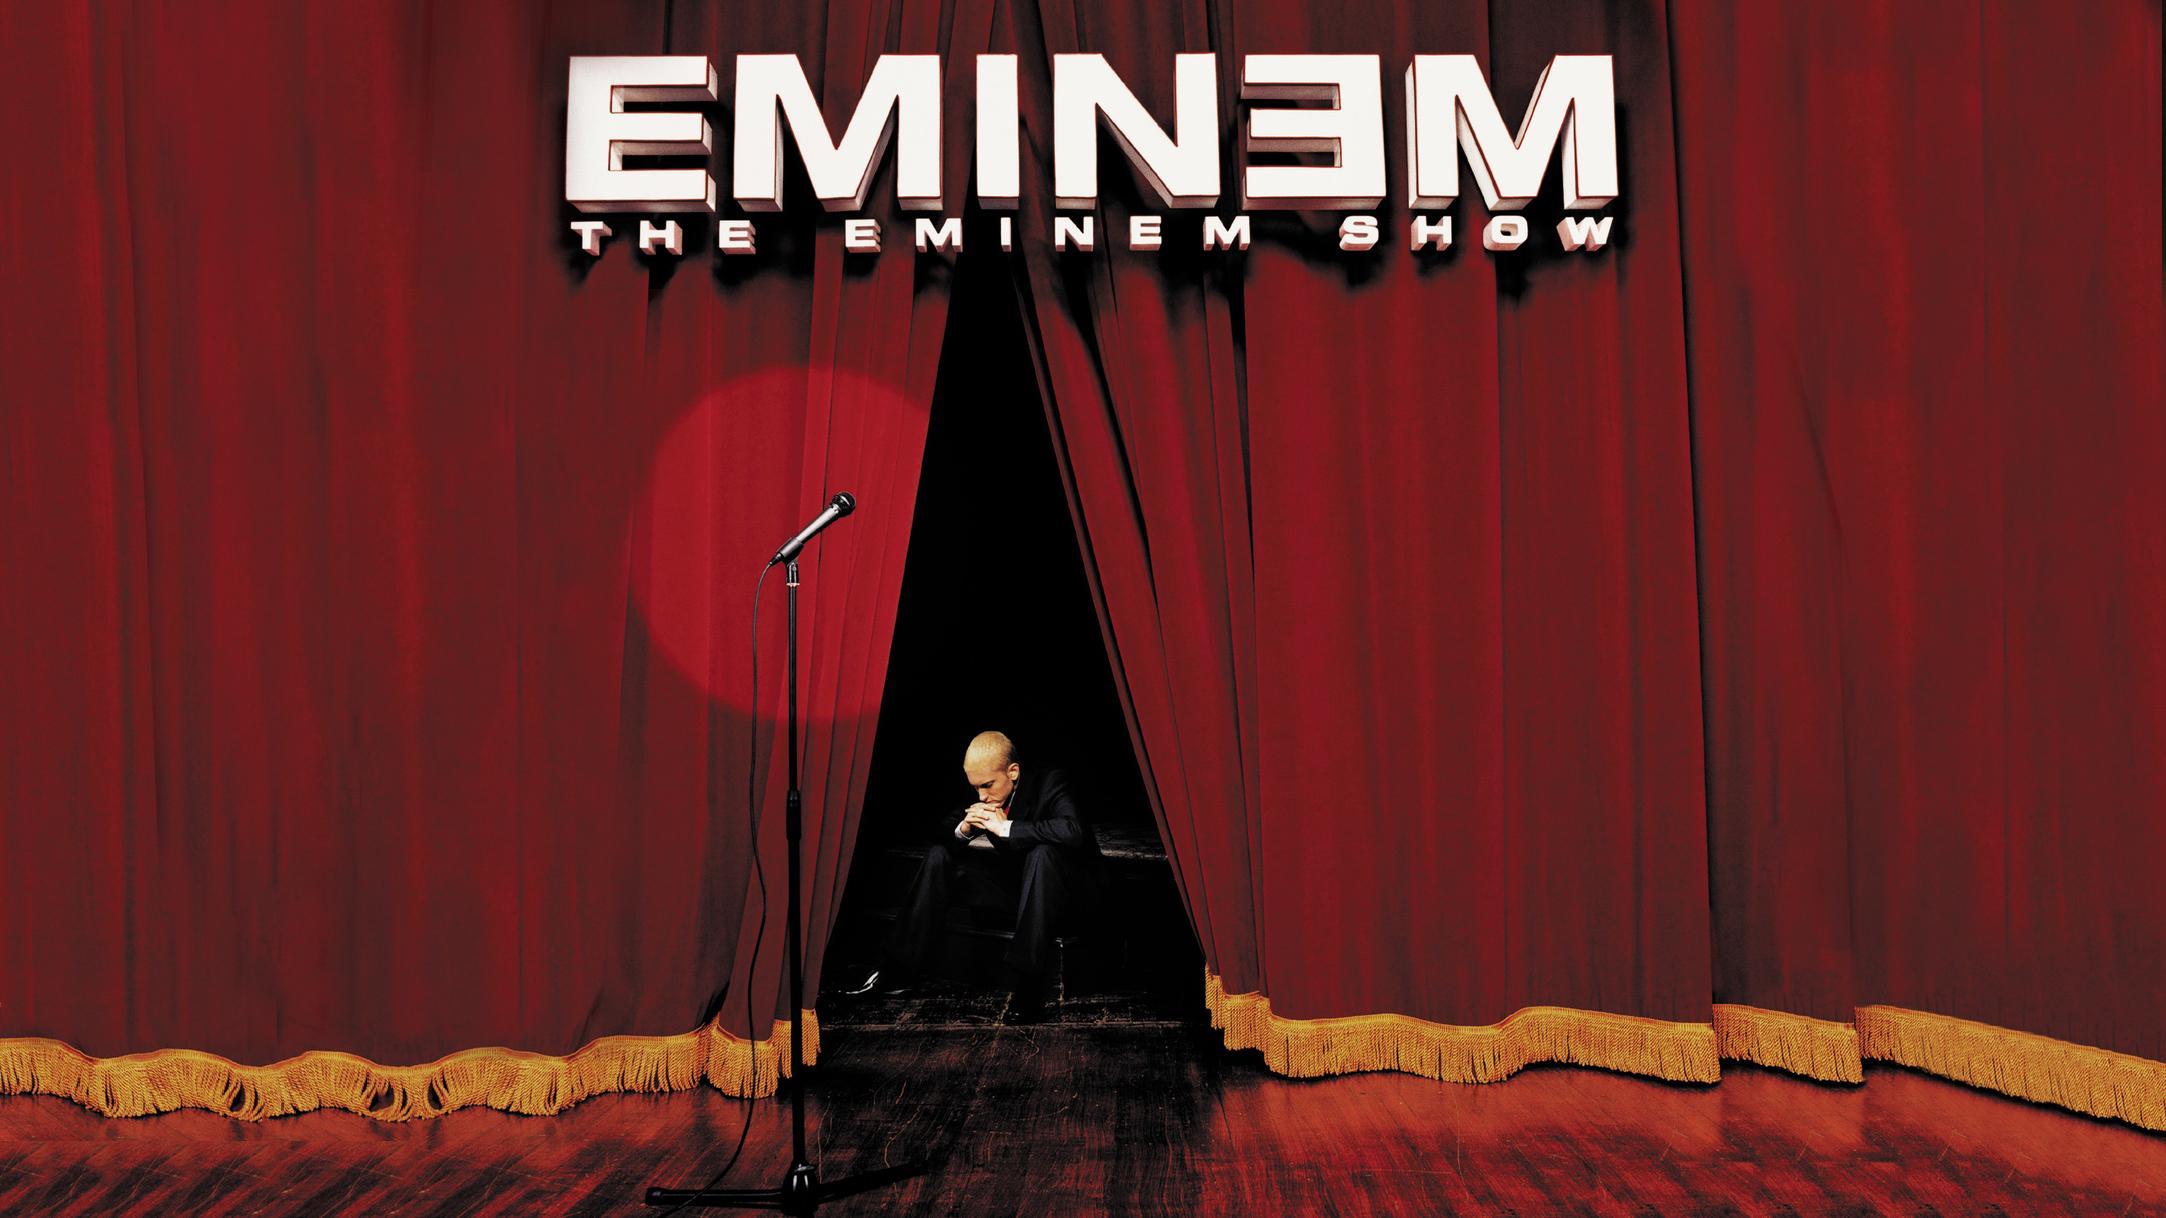 Eminem revival album download free